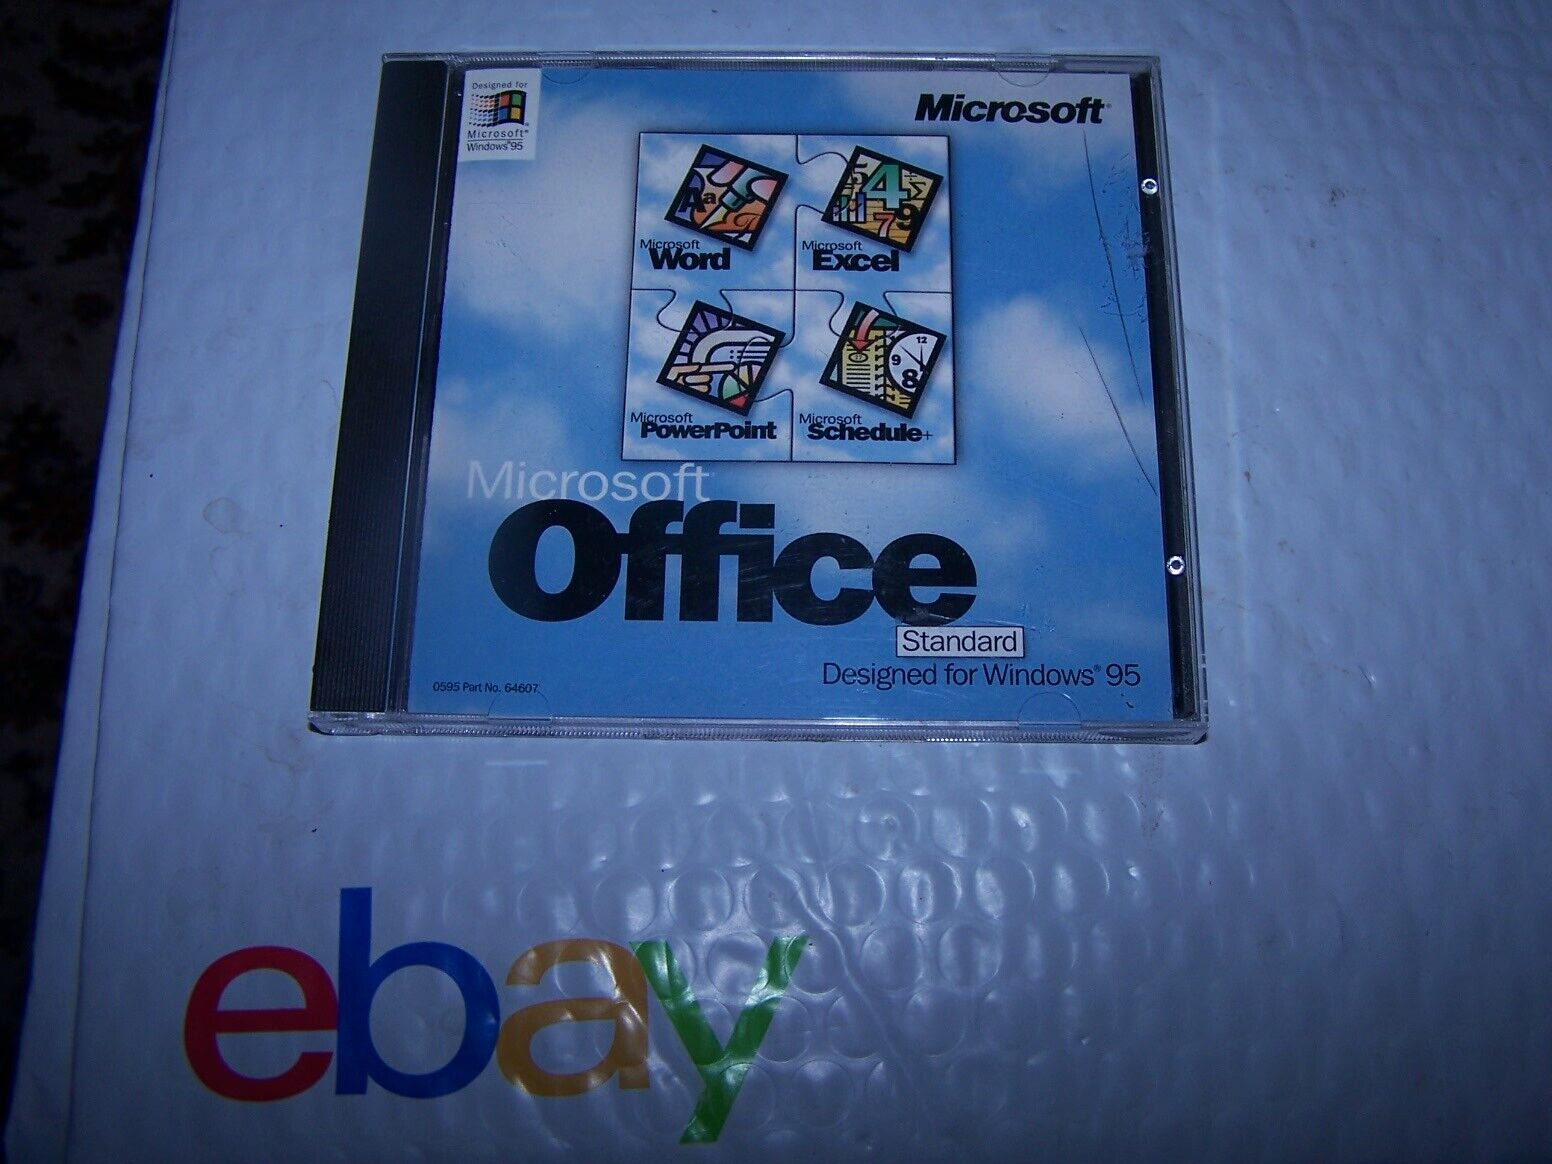 Microsoft Office Standard Designed for Windows 95 - 021-056-002